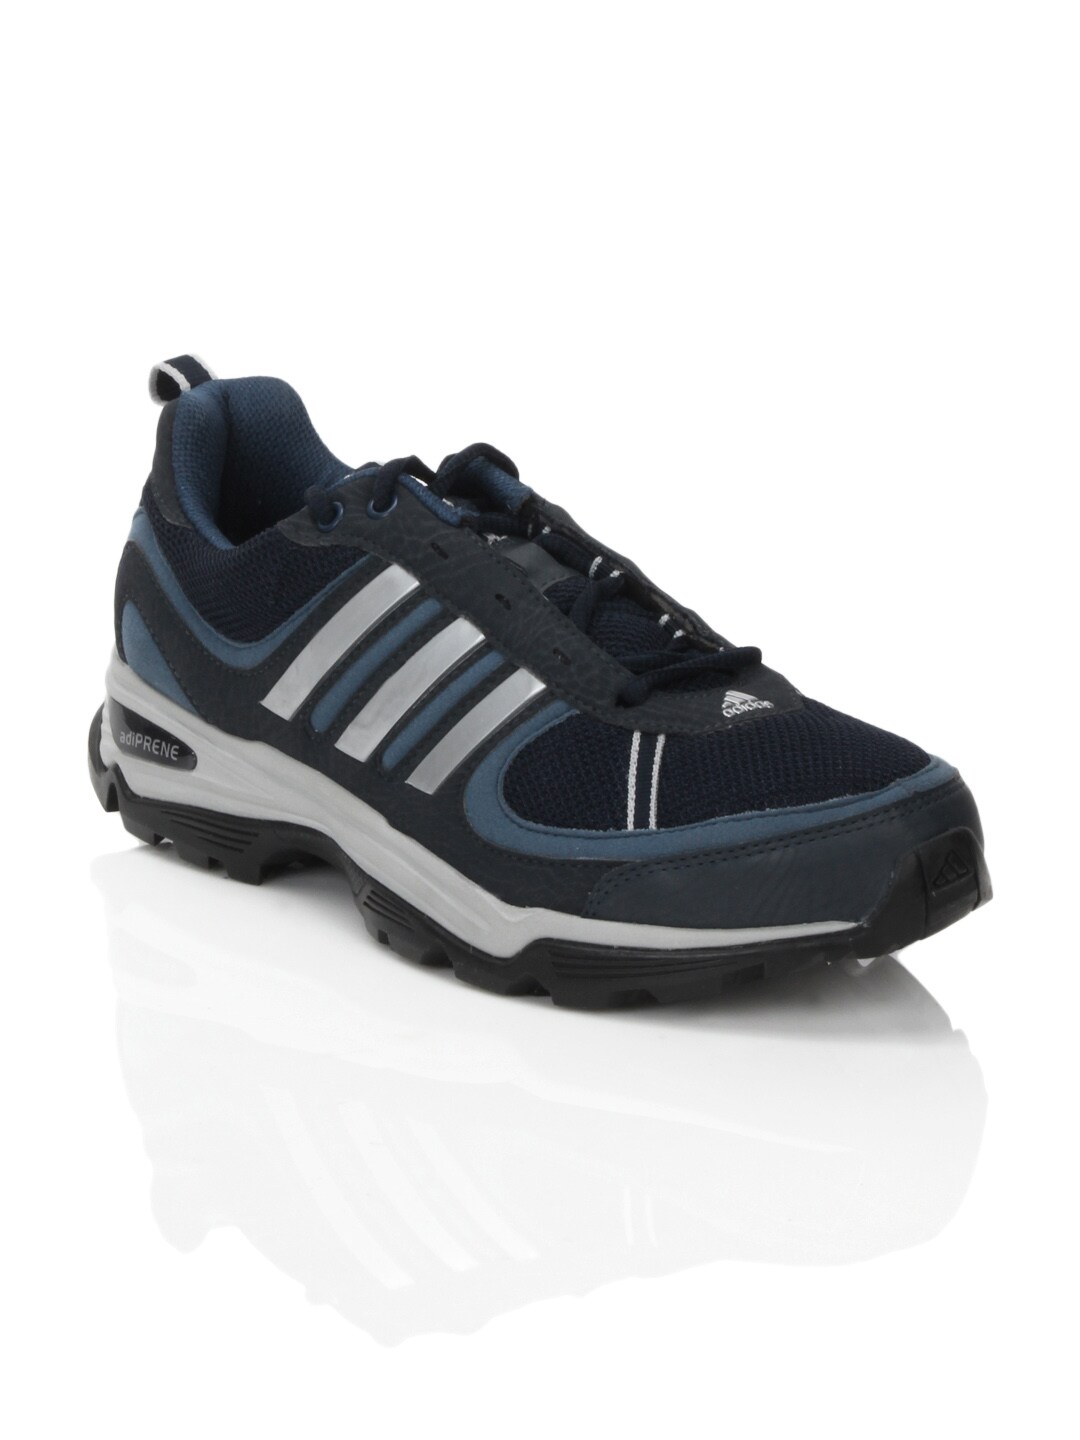 ADIDAS Men Speedtrek Navy Blue Sports Shoes